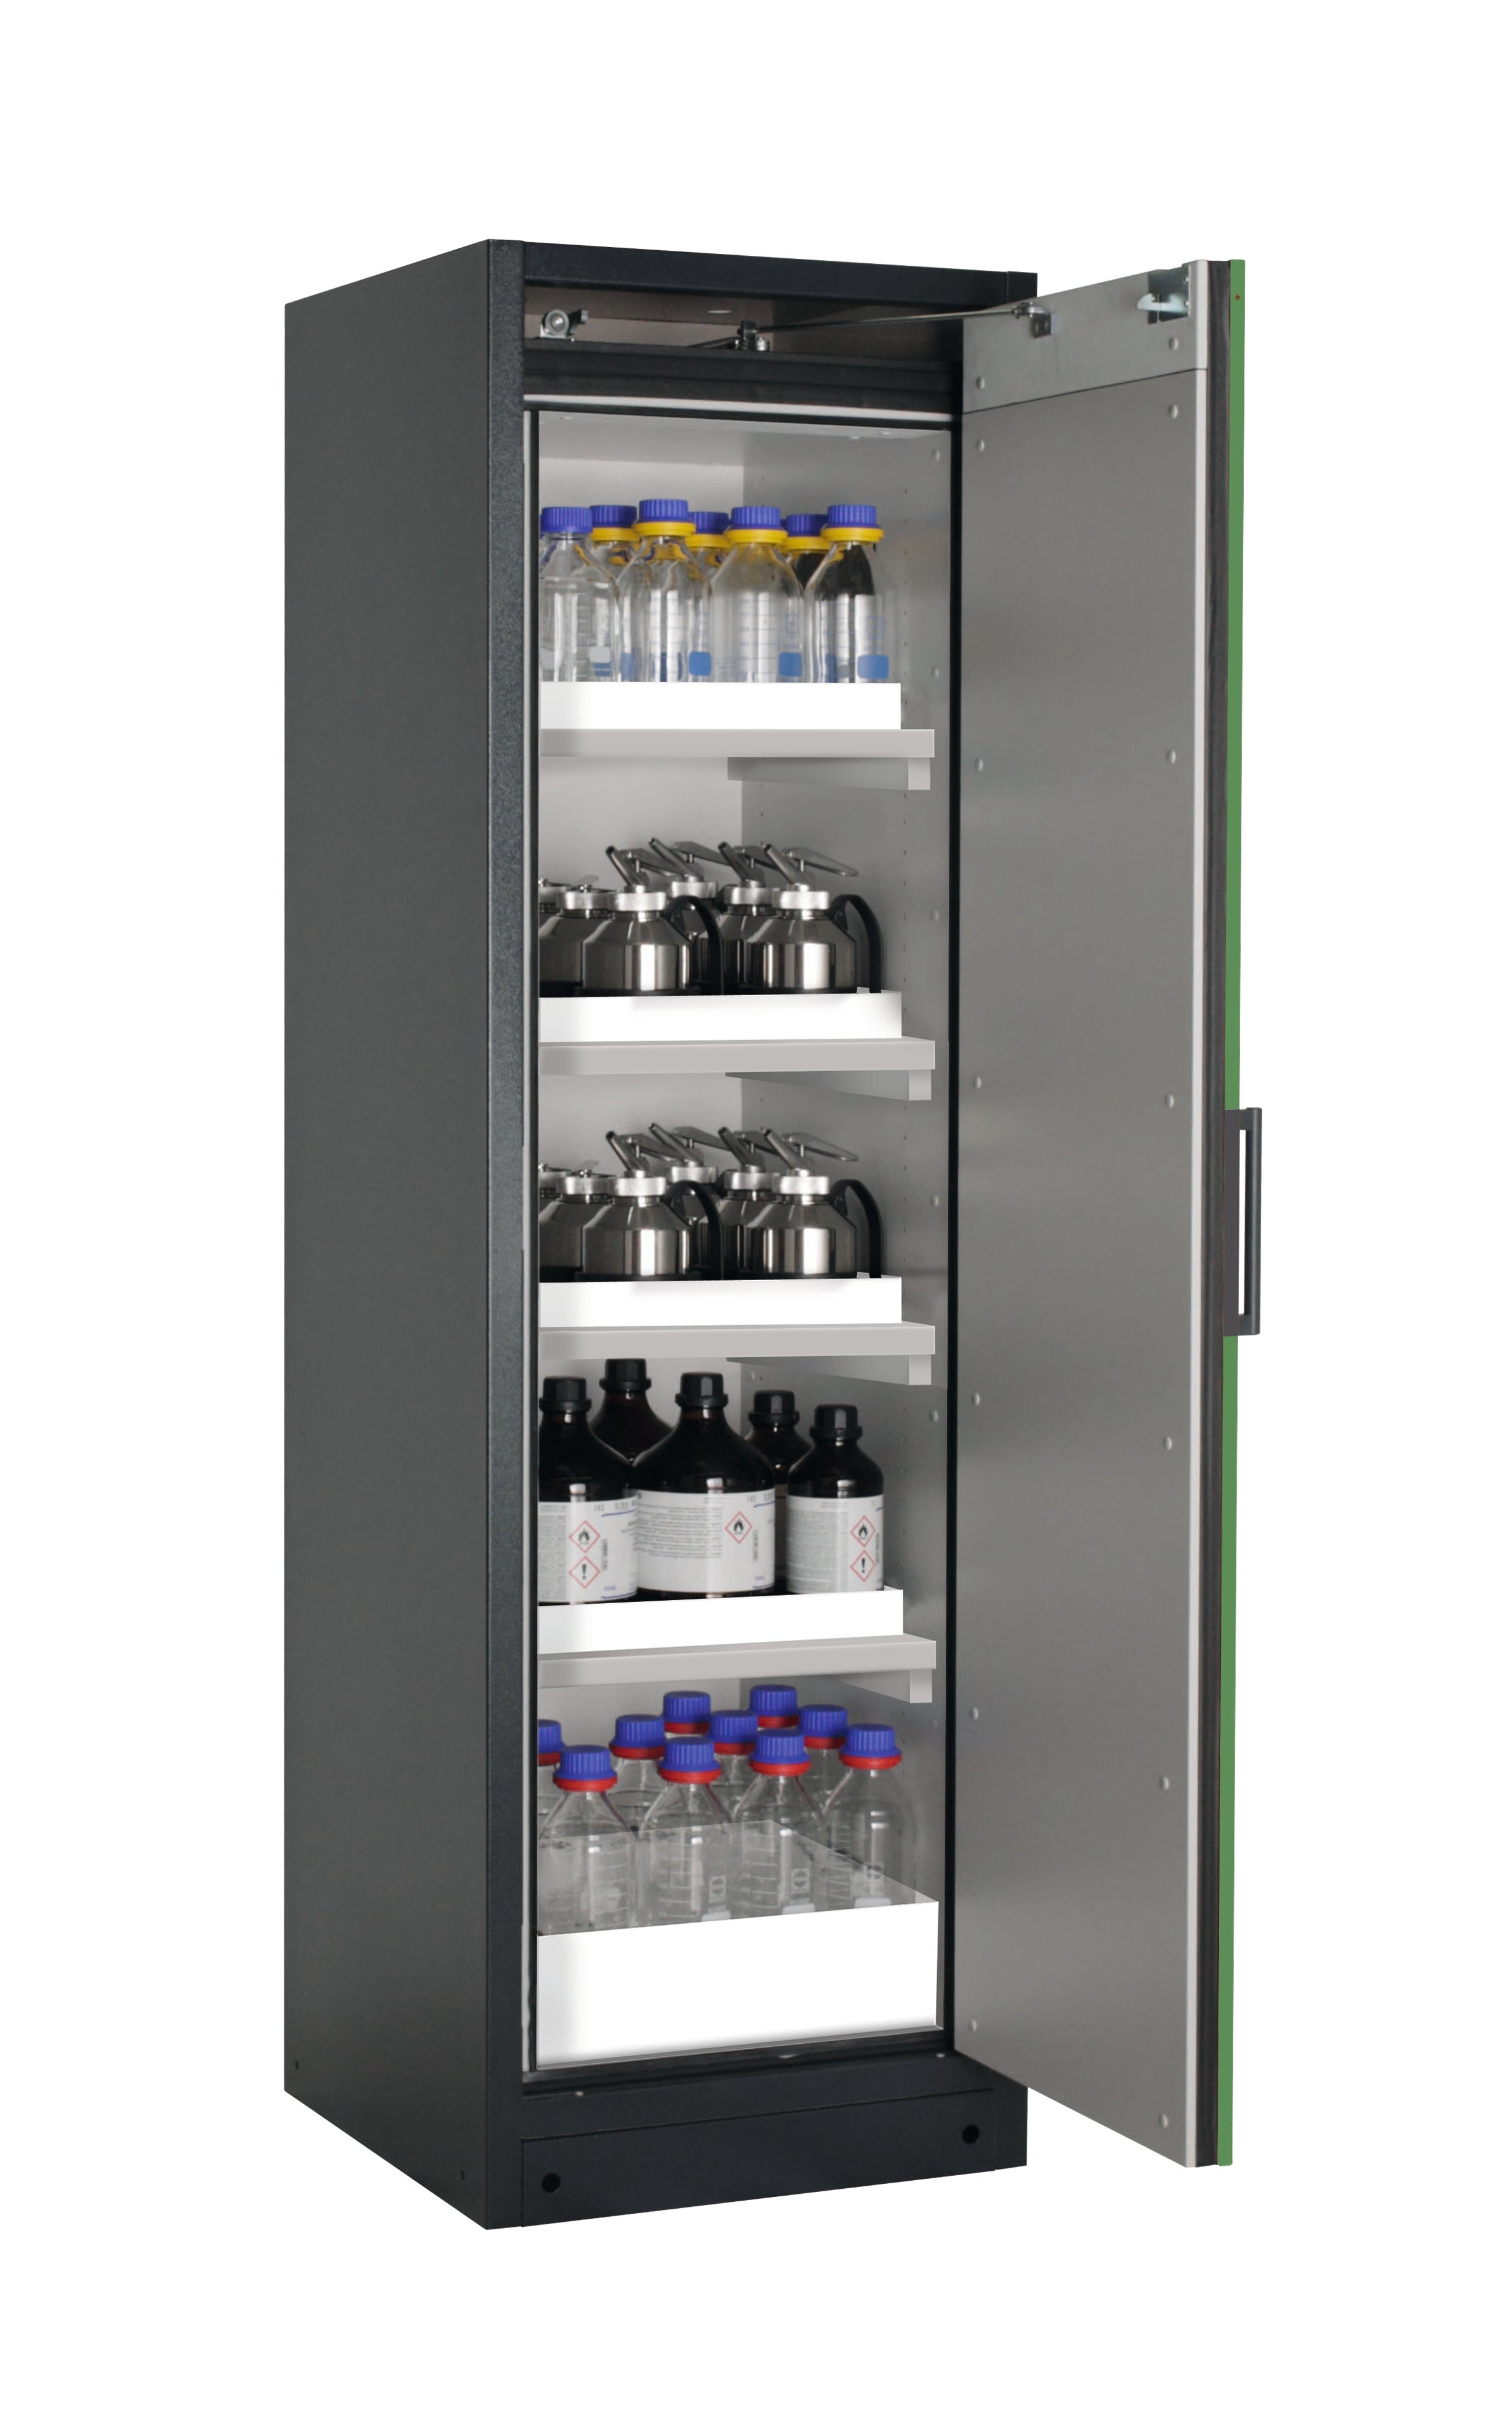 Type 90 safety storage cabinet Q-PEGASUS-90 model Q90.195.060.WDACR in reseda green RAL 6011 with 4x tray shelf (standard) (polypropylene),